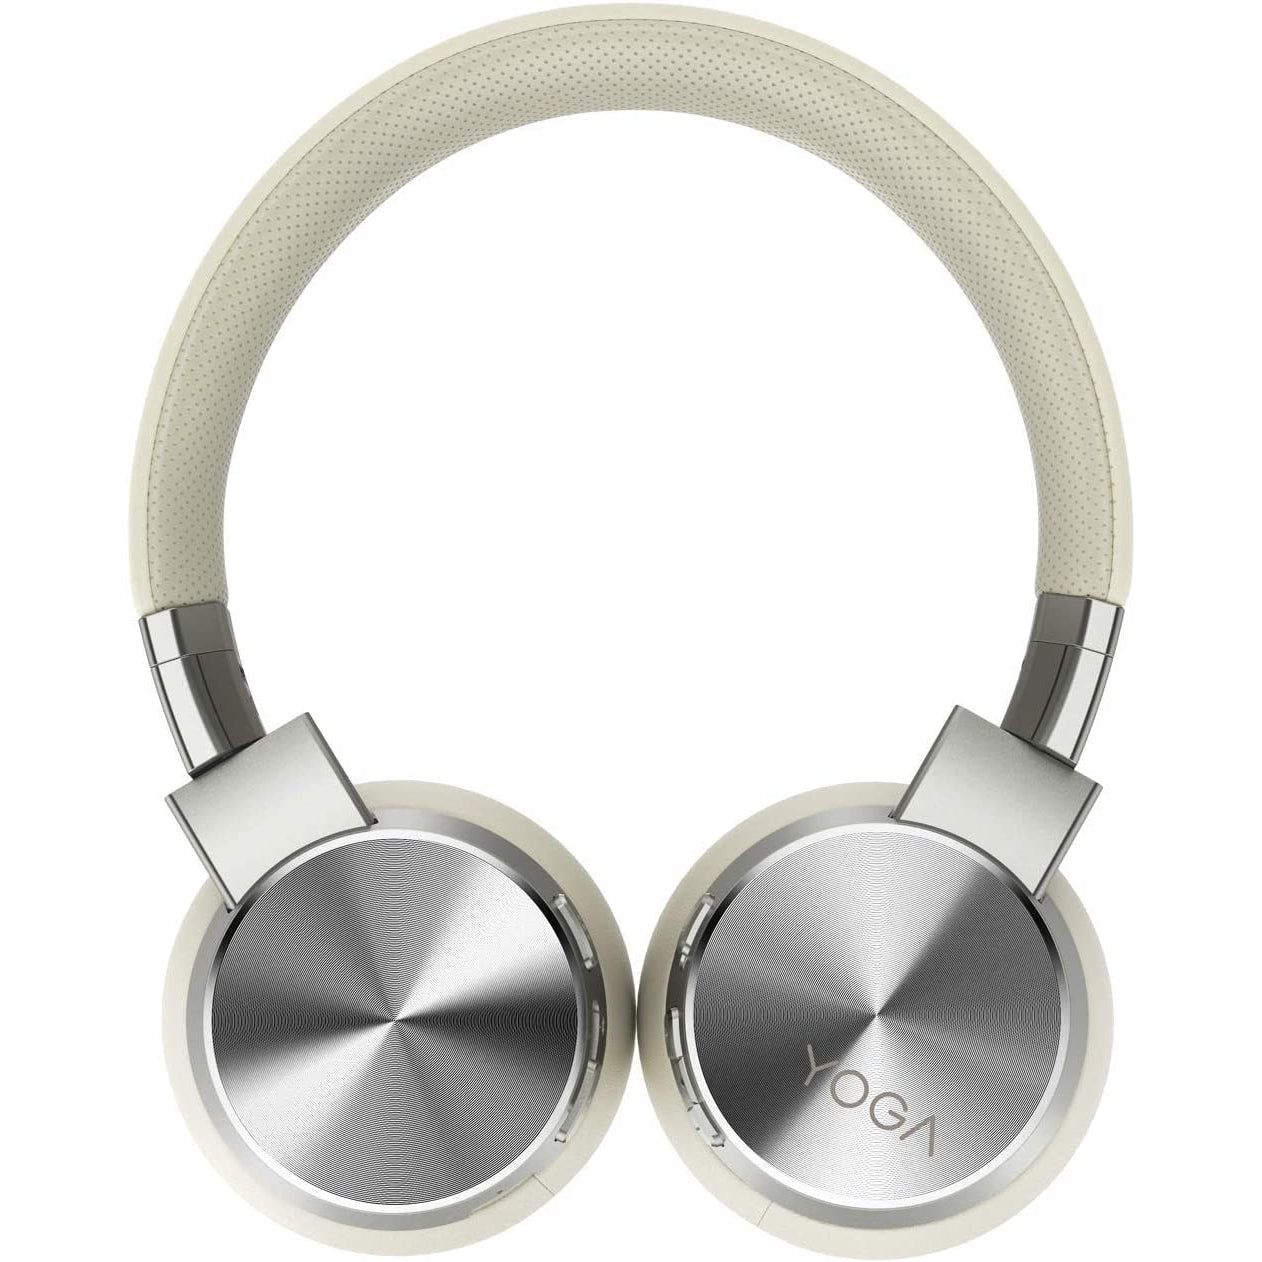 Lenovo Yoga Active Noise Cancellation Headphones - Refurbished Pristine